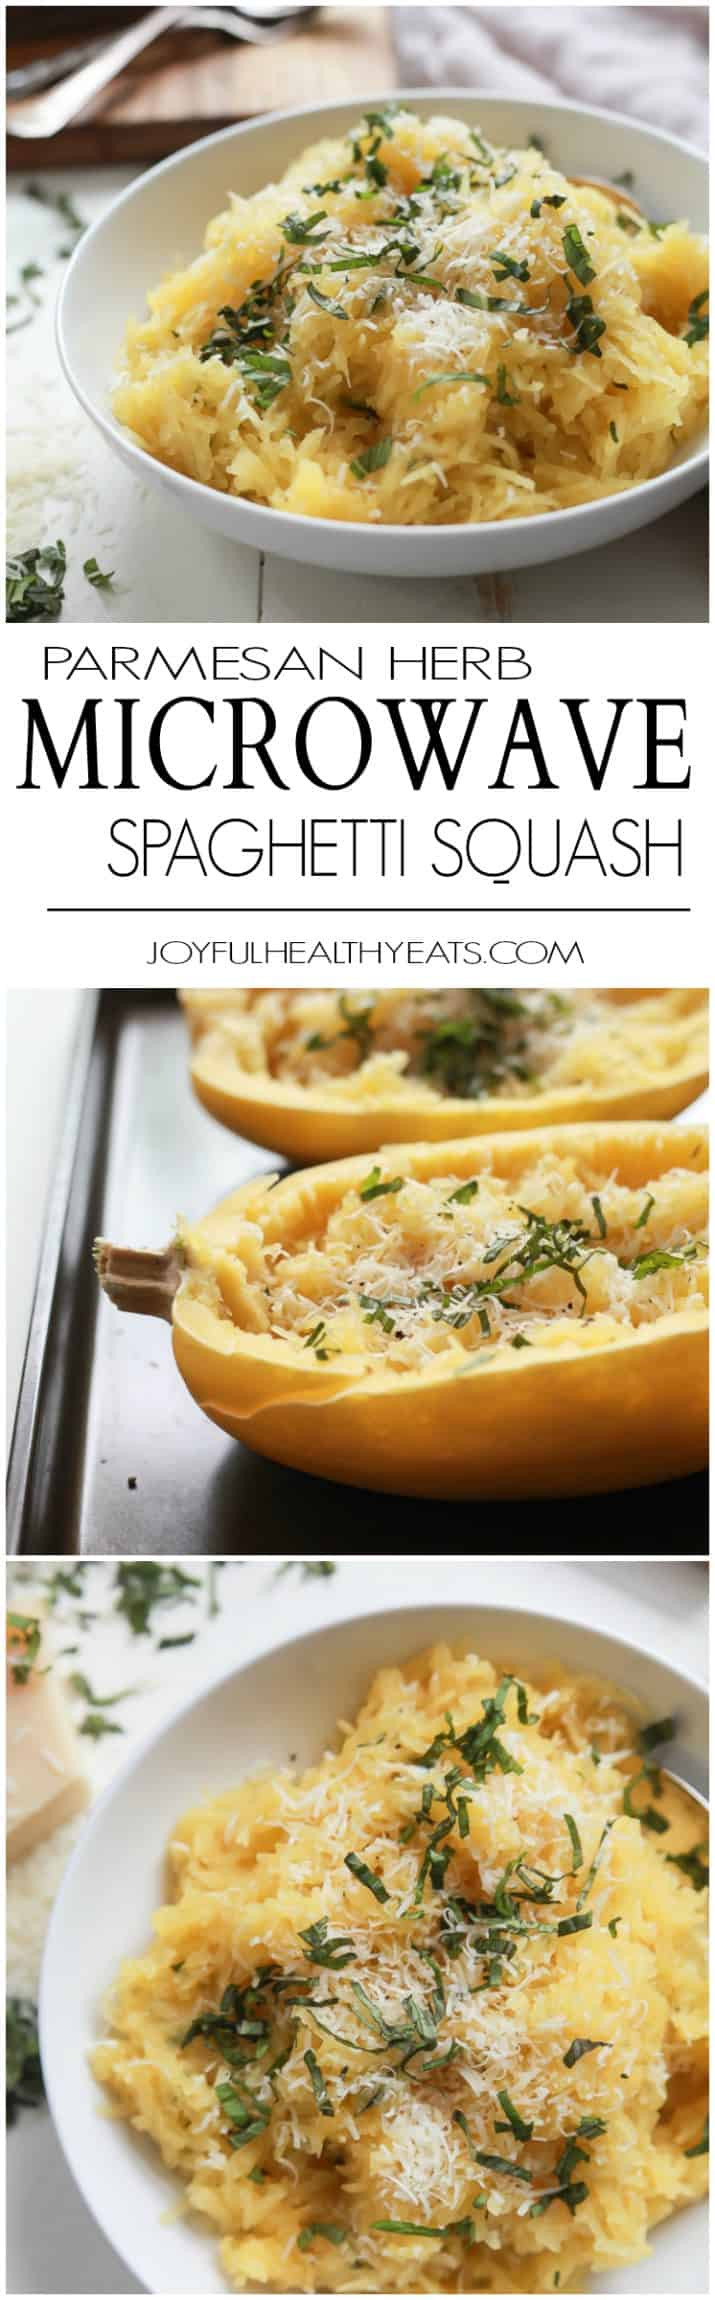 Spaghetti Squash Microwave
 Parmesan Herb Microwave Spaghetti Squash